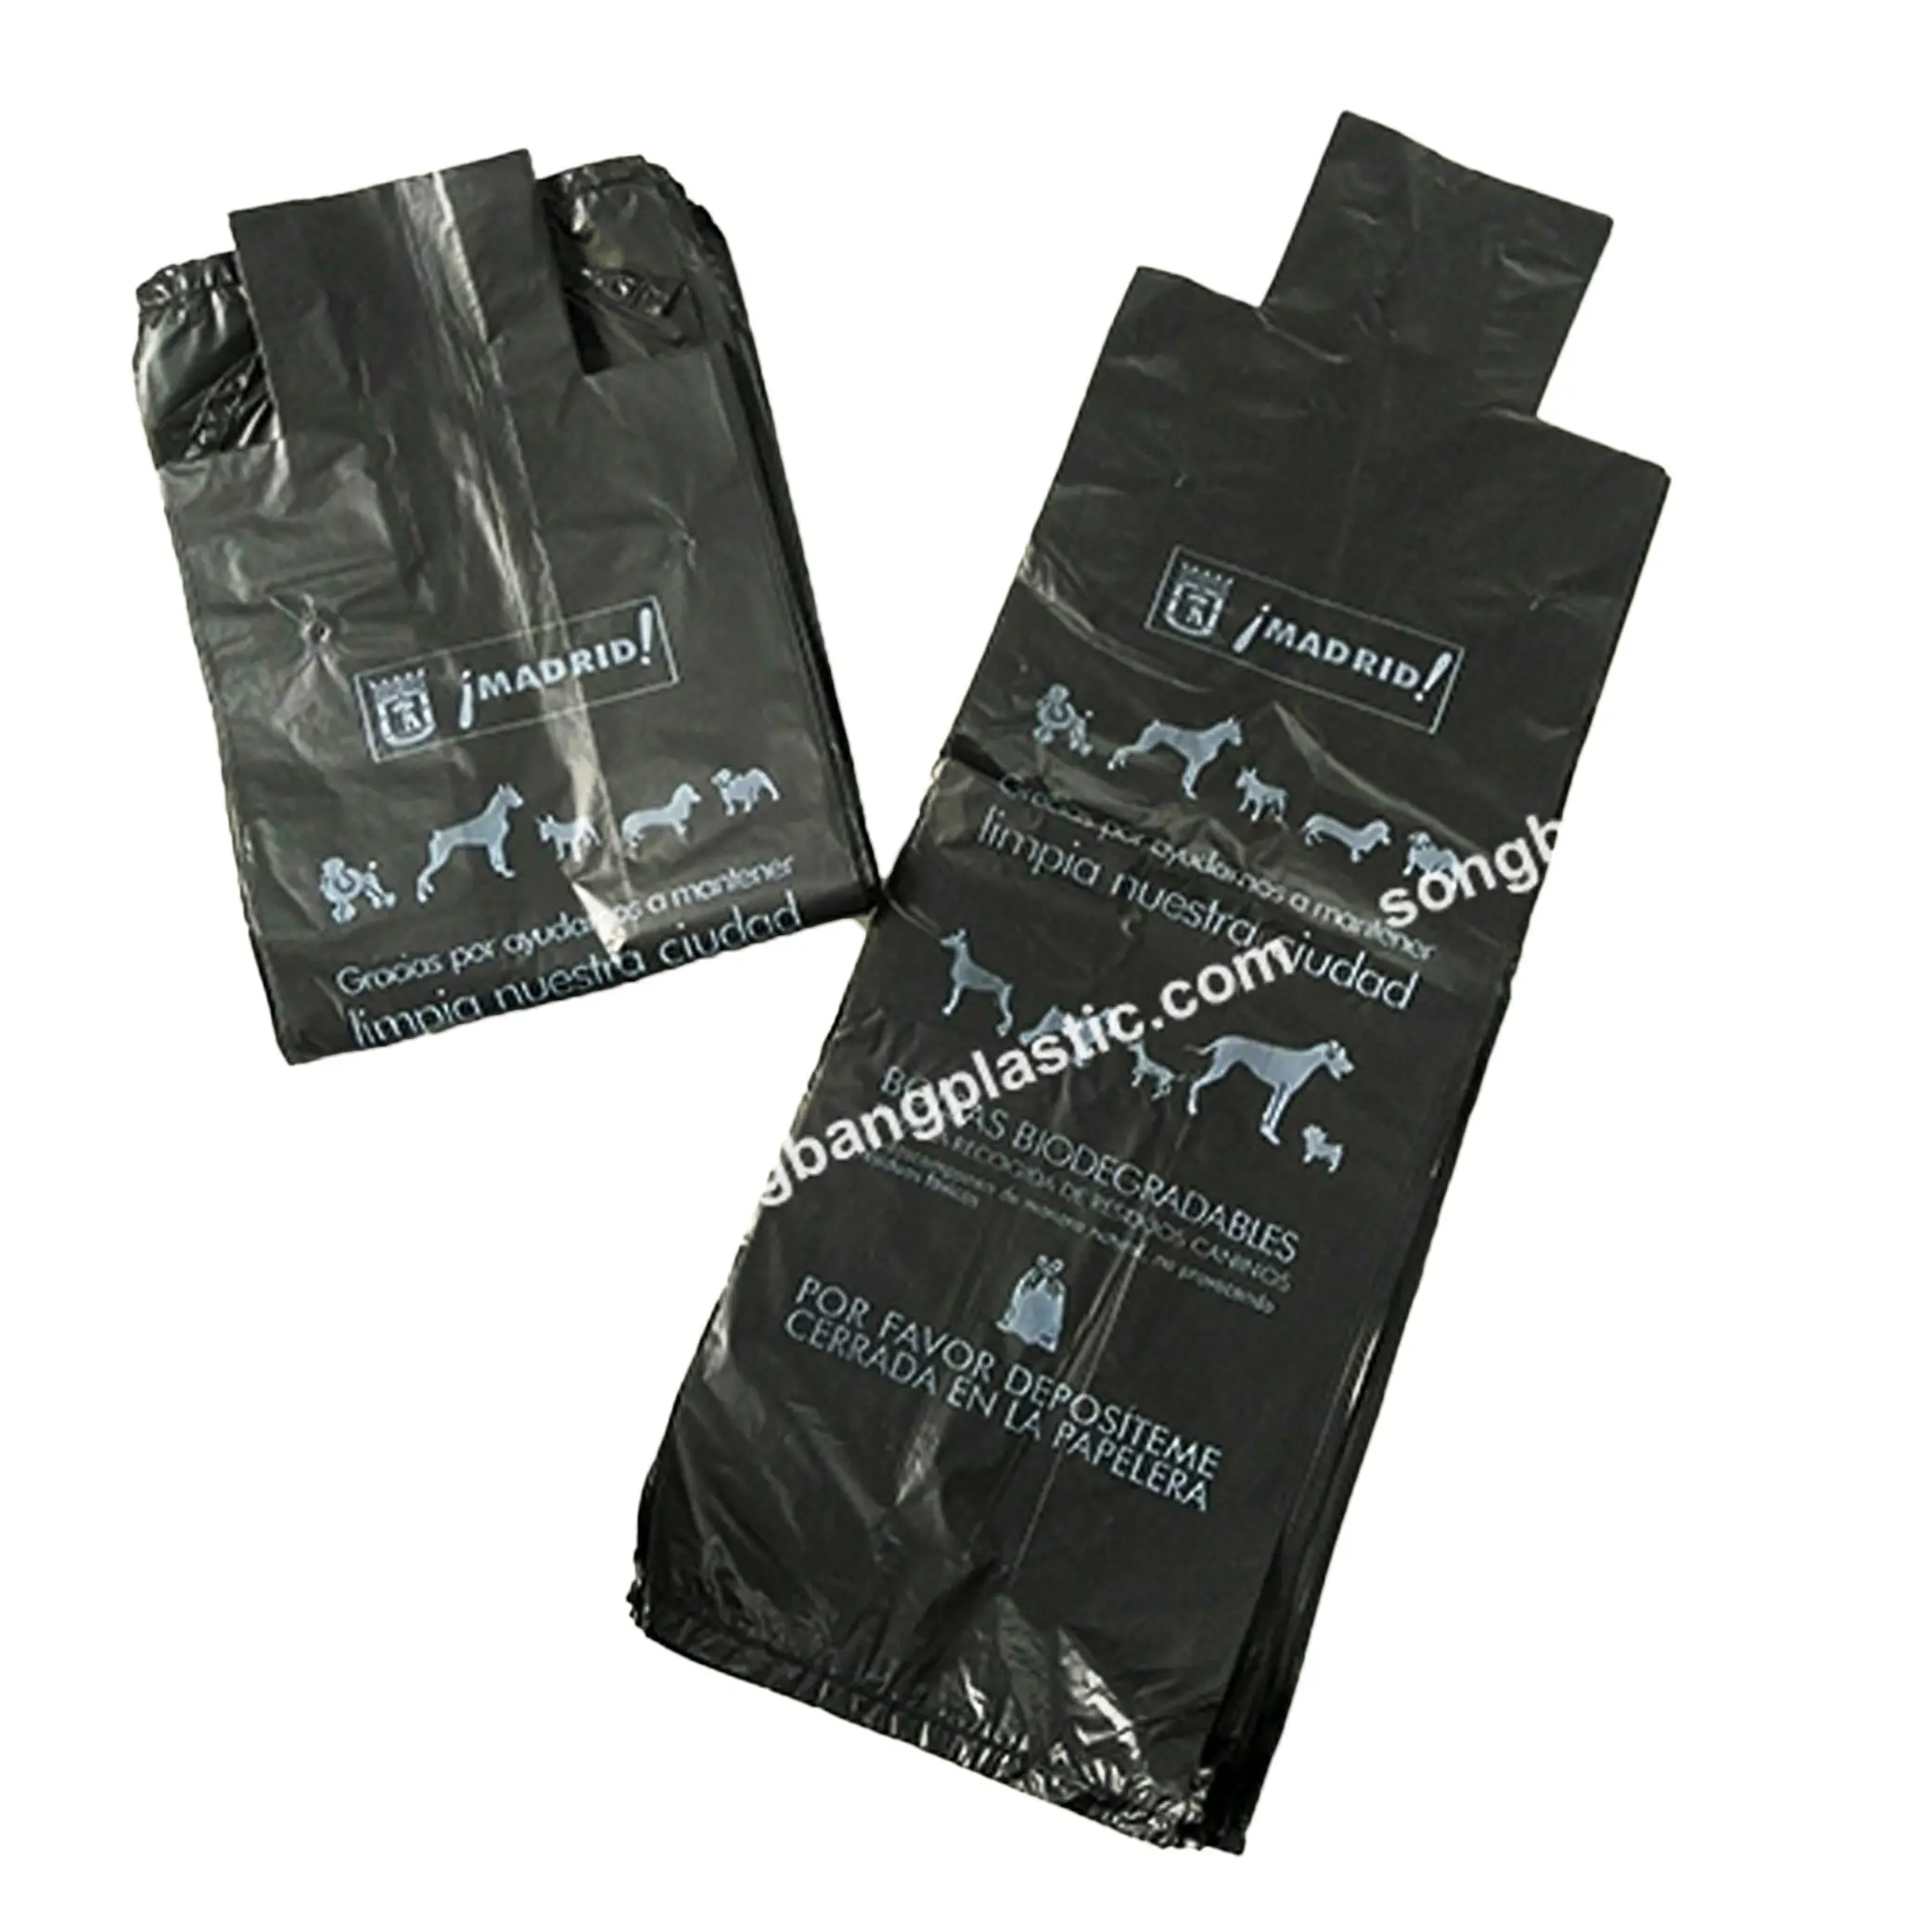 Bolsas de basura de color negro con impresión de logotipo personalizado, bolsas de basura para fabricación de mascotas, empresa en Vietnam